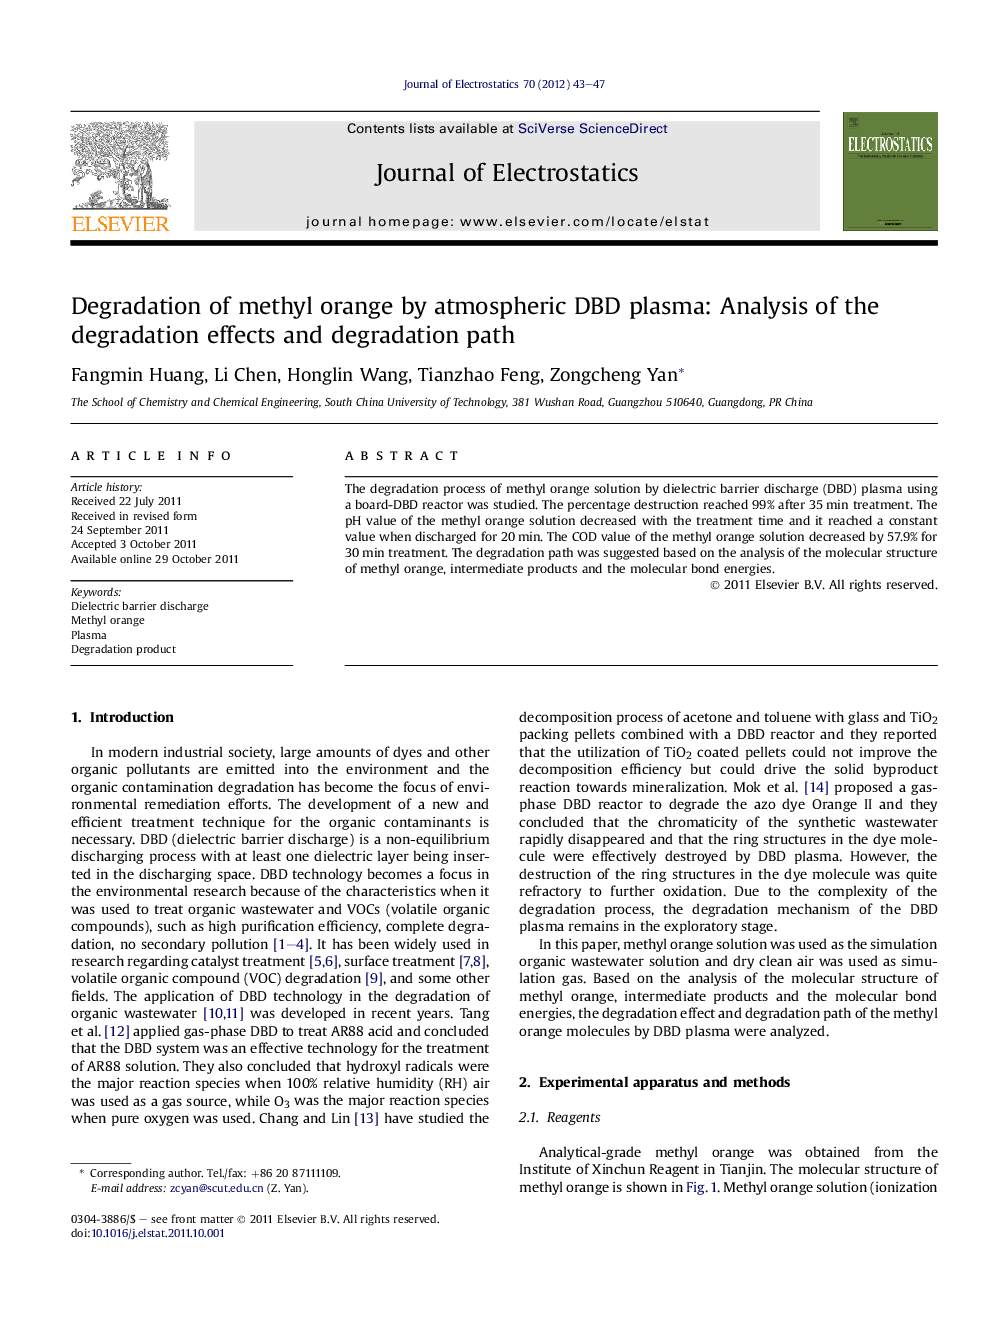 Degradation of methyl orange by atmospheric DBD plasma: Analysis of the degradation effects and degradation path